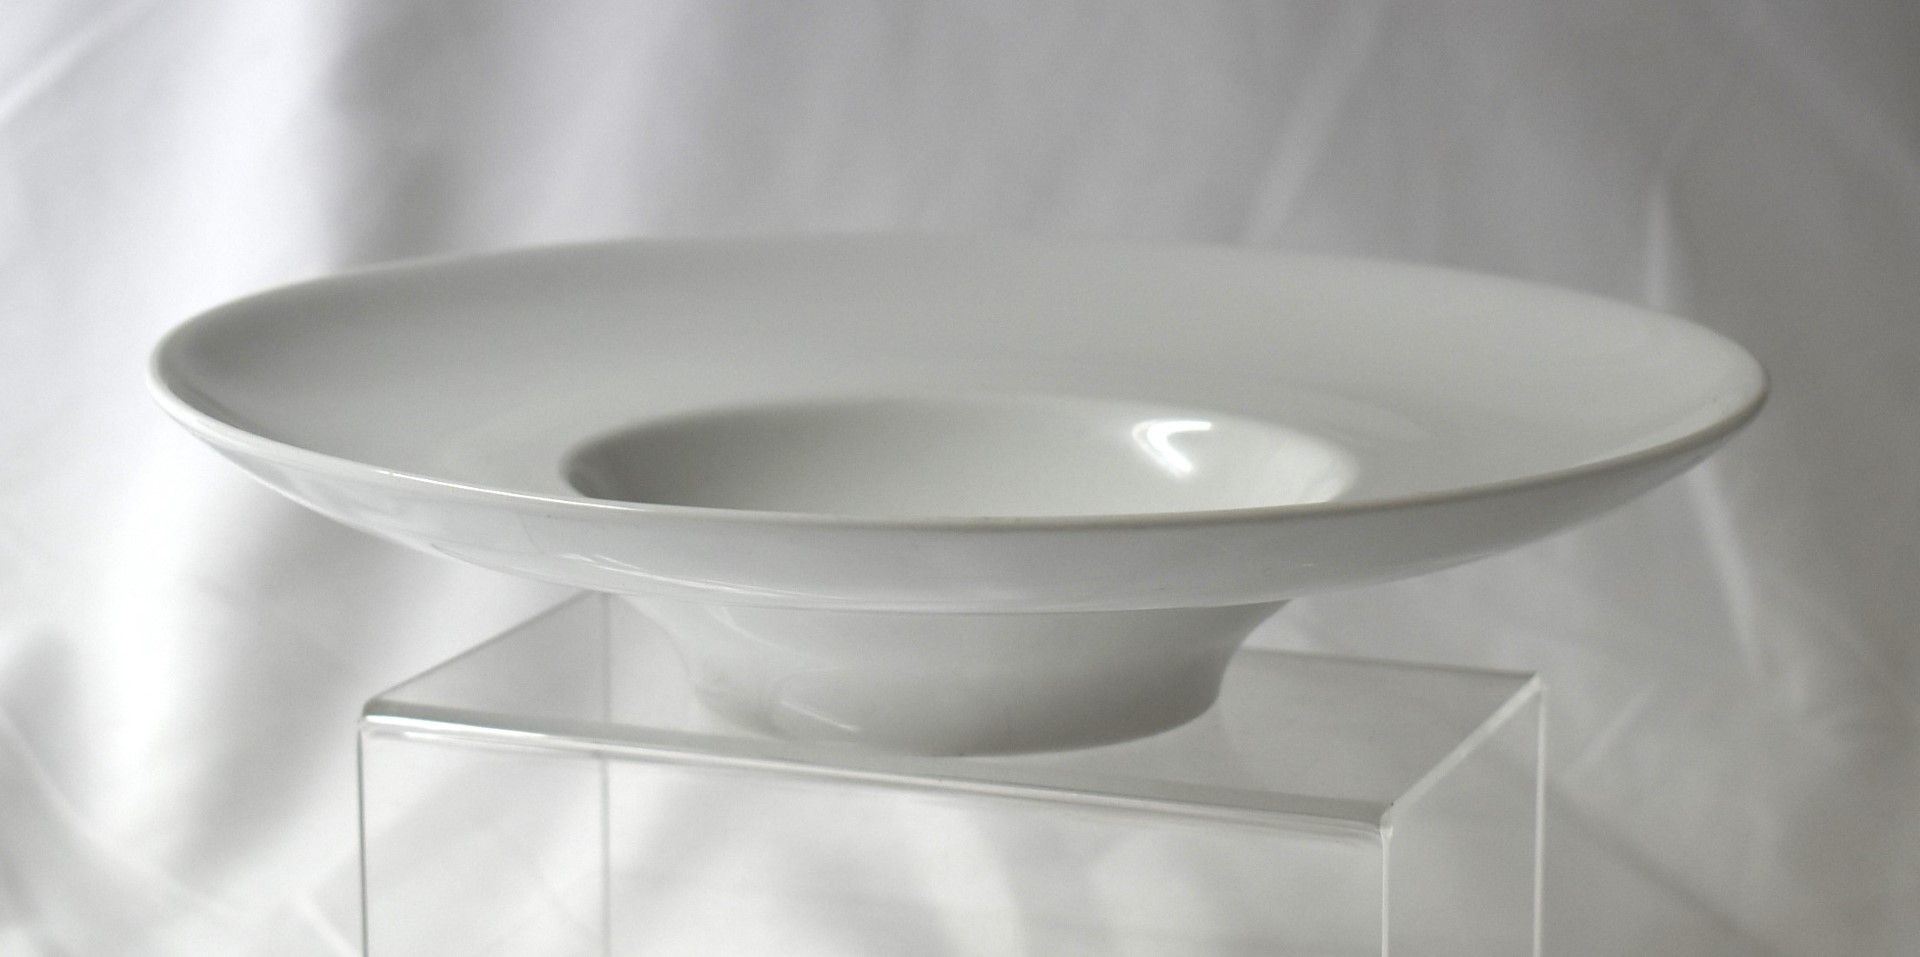 6 x Pillivuyt French Porcelain Wide Rim Dinner Bowls - 26cm Diameter - CL011 - Ref: PX279 - - Image 3 of 5